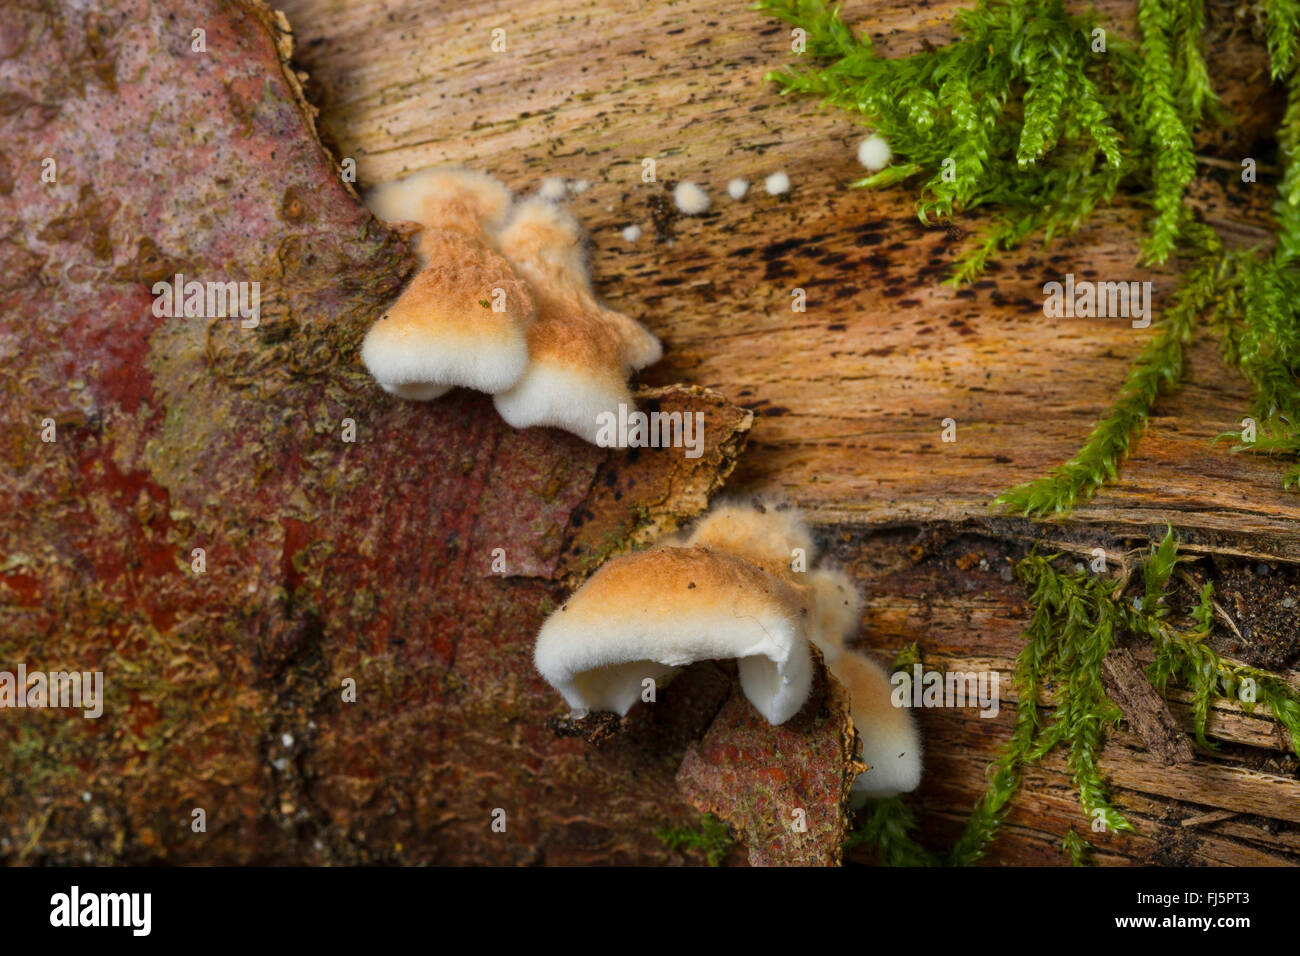 Plicatura crispa (Plicatura crispa, Plicatura faginea, Plicaturopsis crispa), fruiting bodies on a tree trunk, Germany Stock Photo